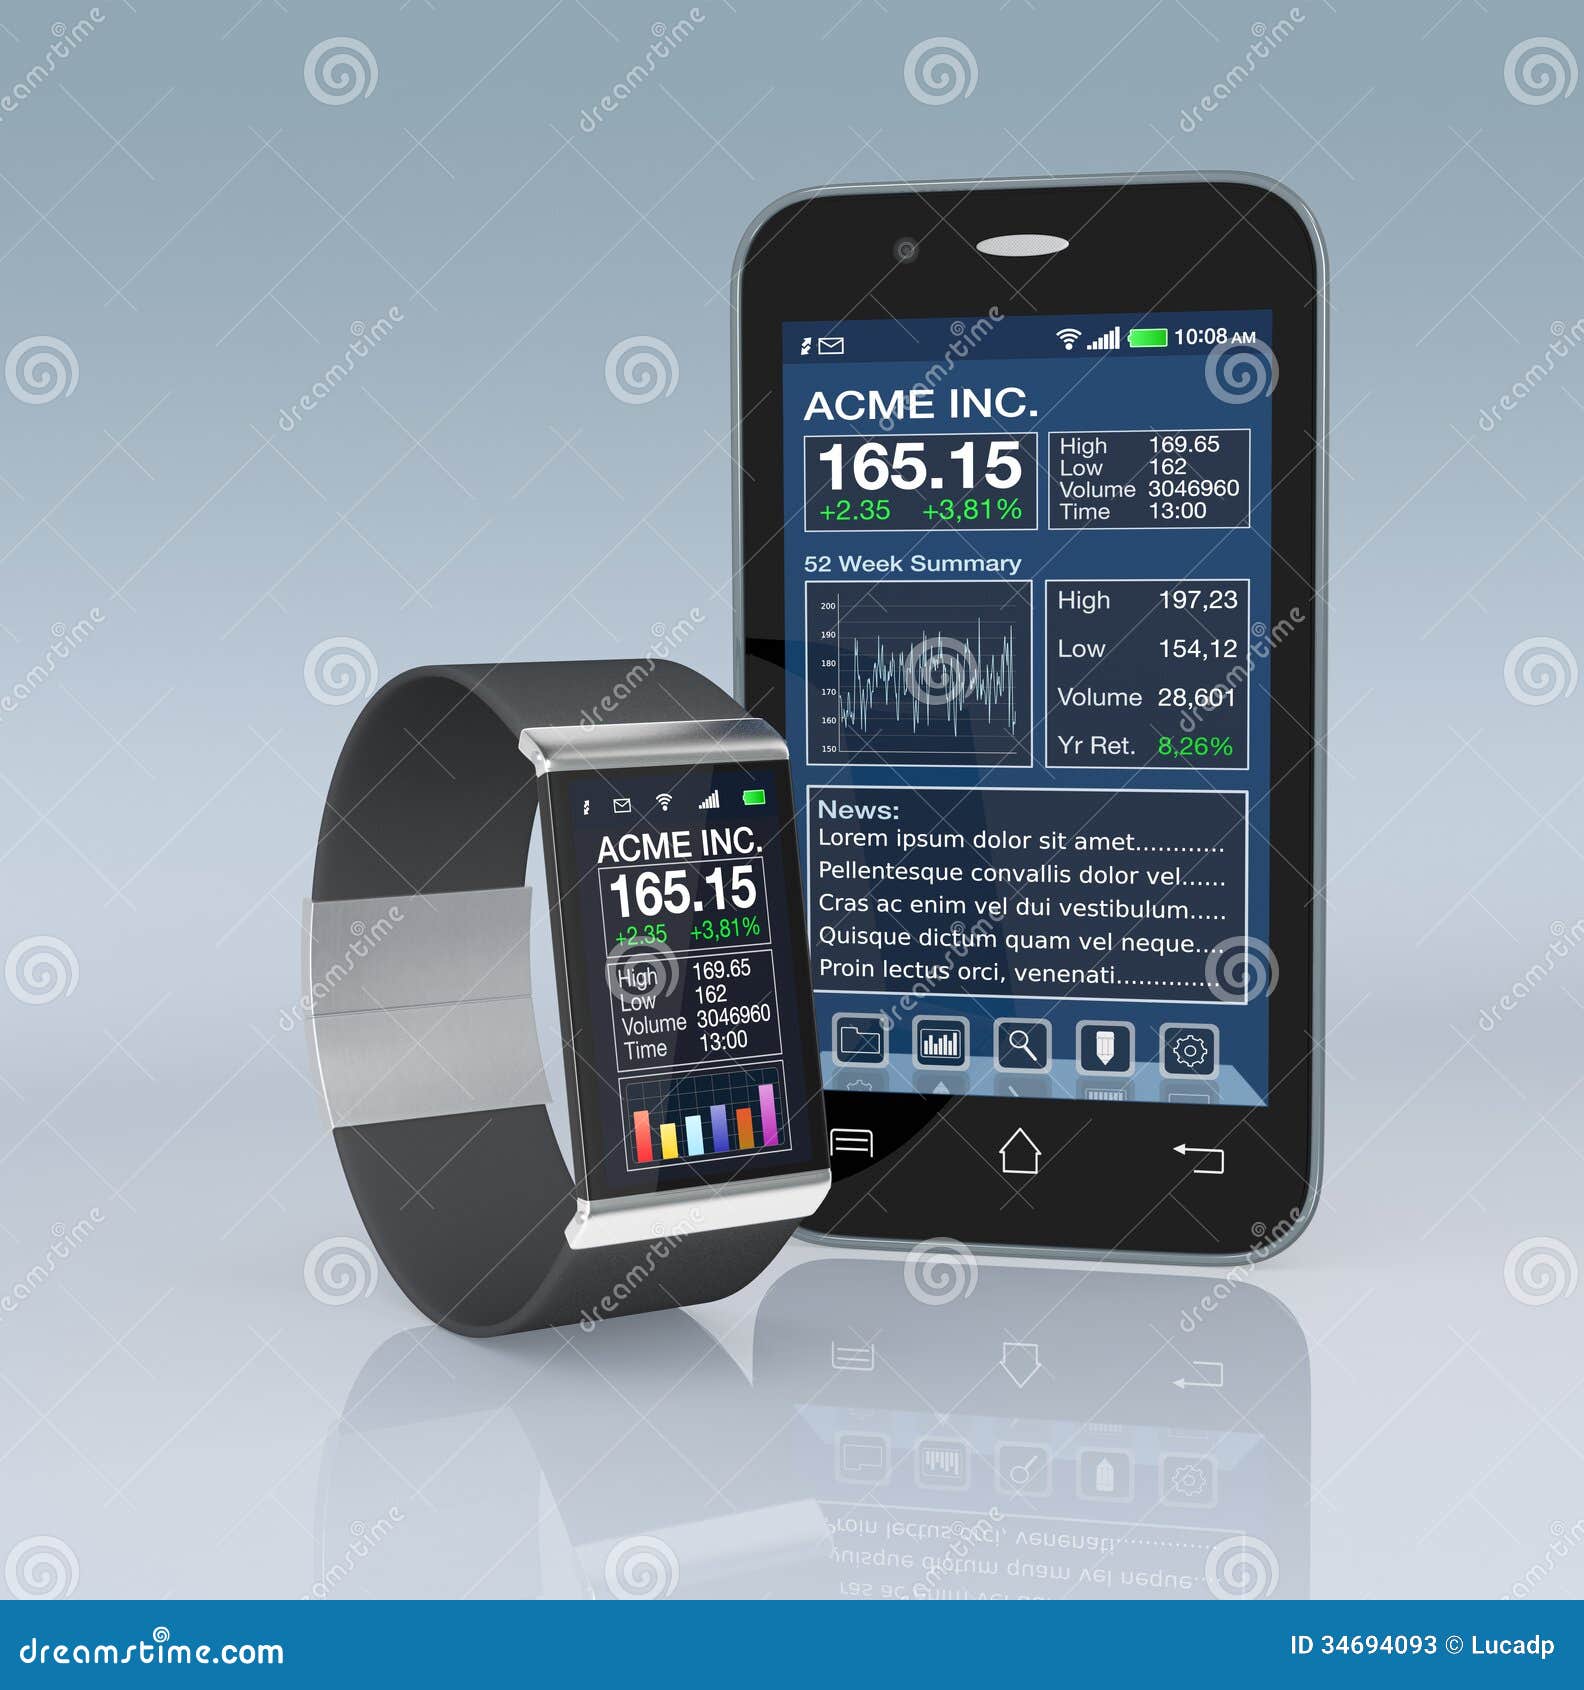 software smart watch phone